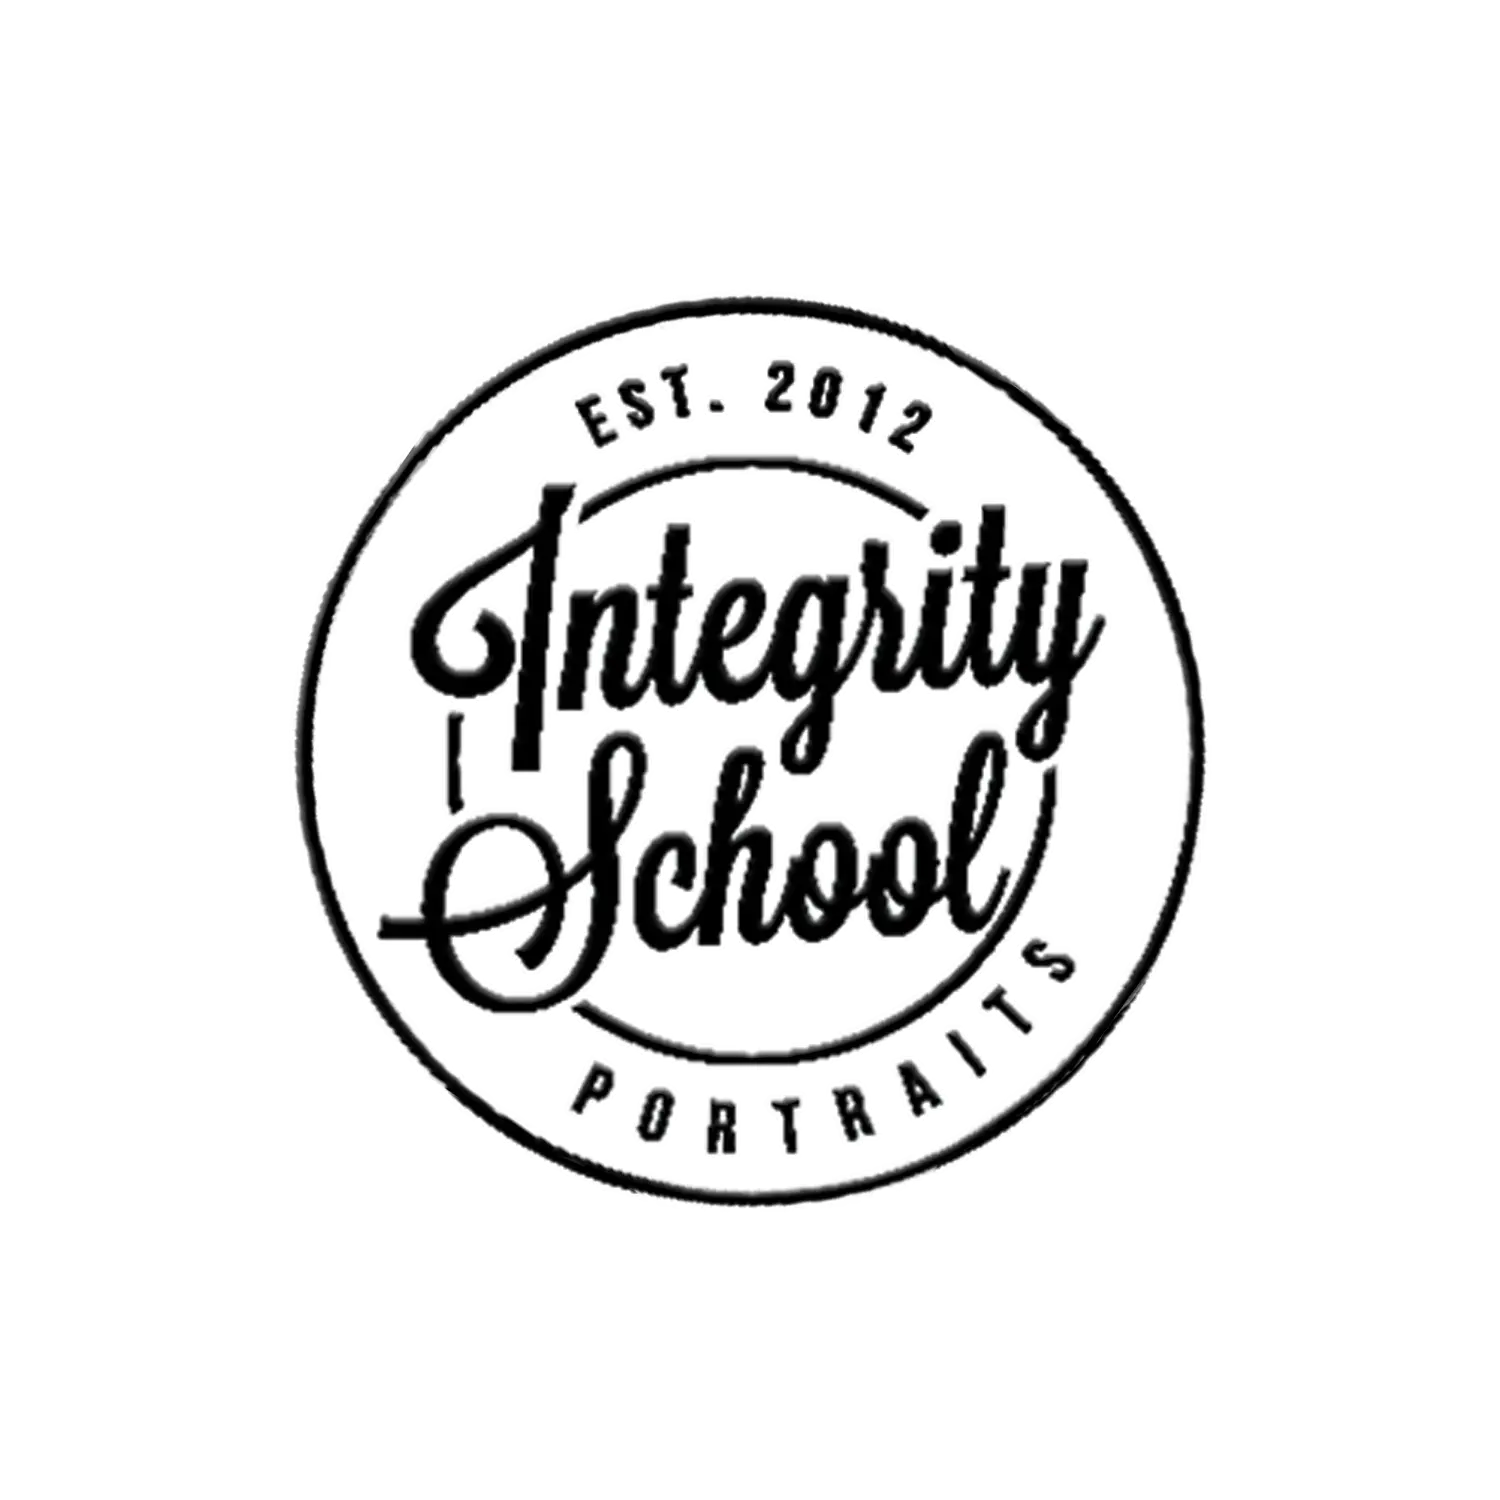 Integrity School Portraits Logo